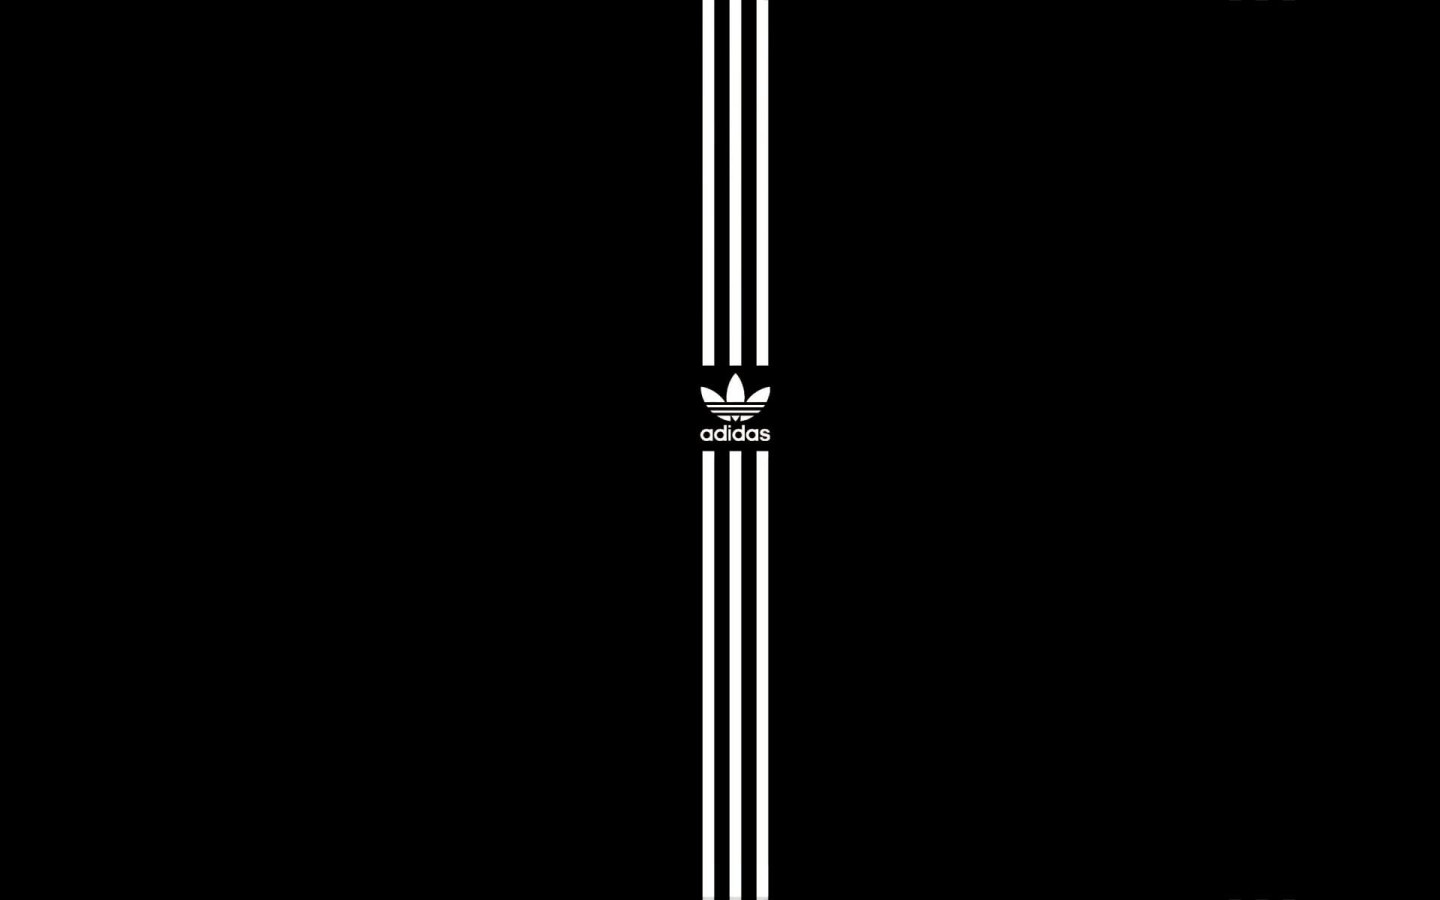 Adidas Logo Wallpaper, Products, Sport, Studio Shot, Black Background • Wallpaper For You